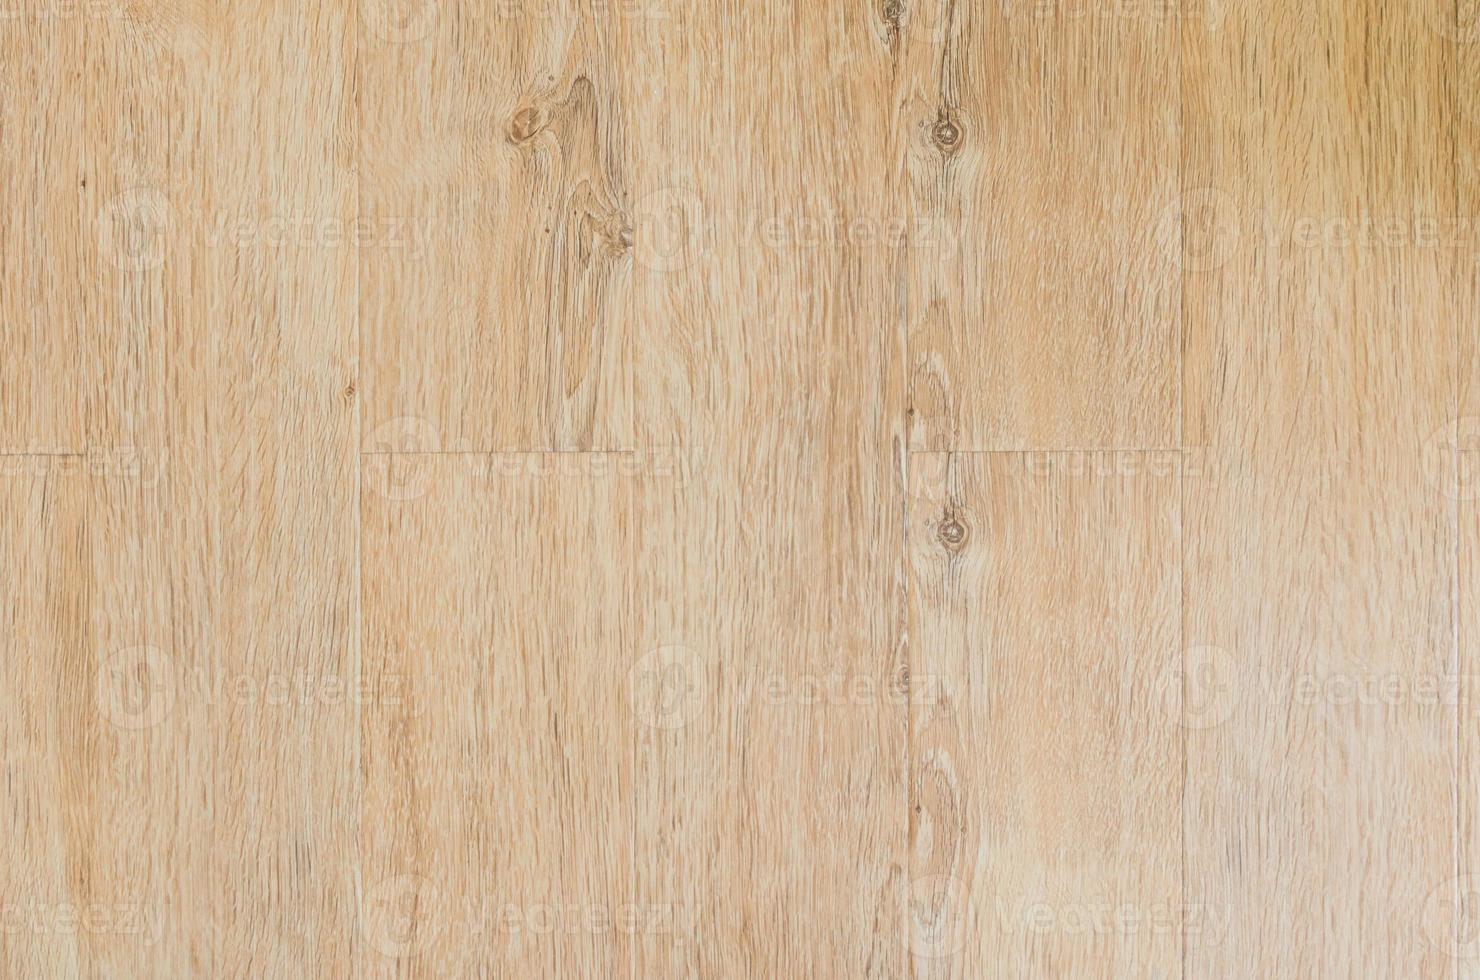 tile floors texture wood background photo